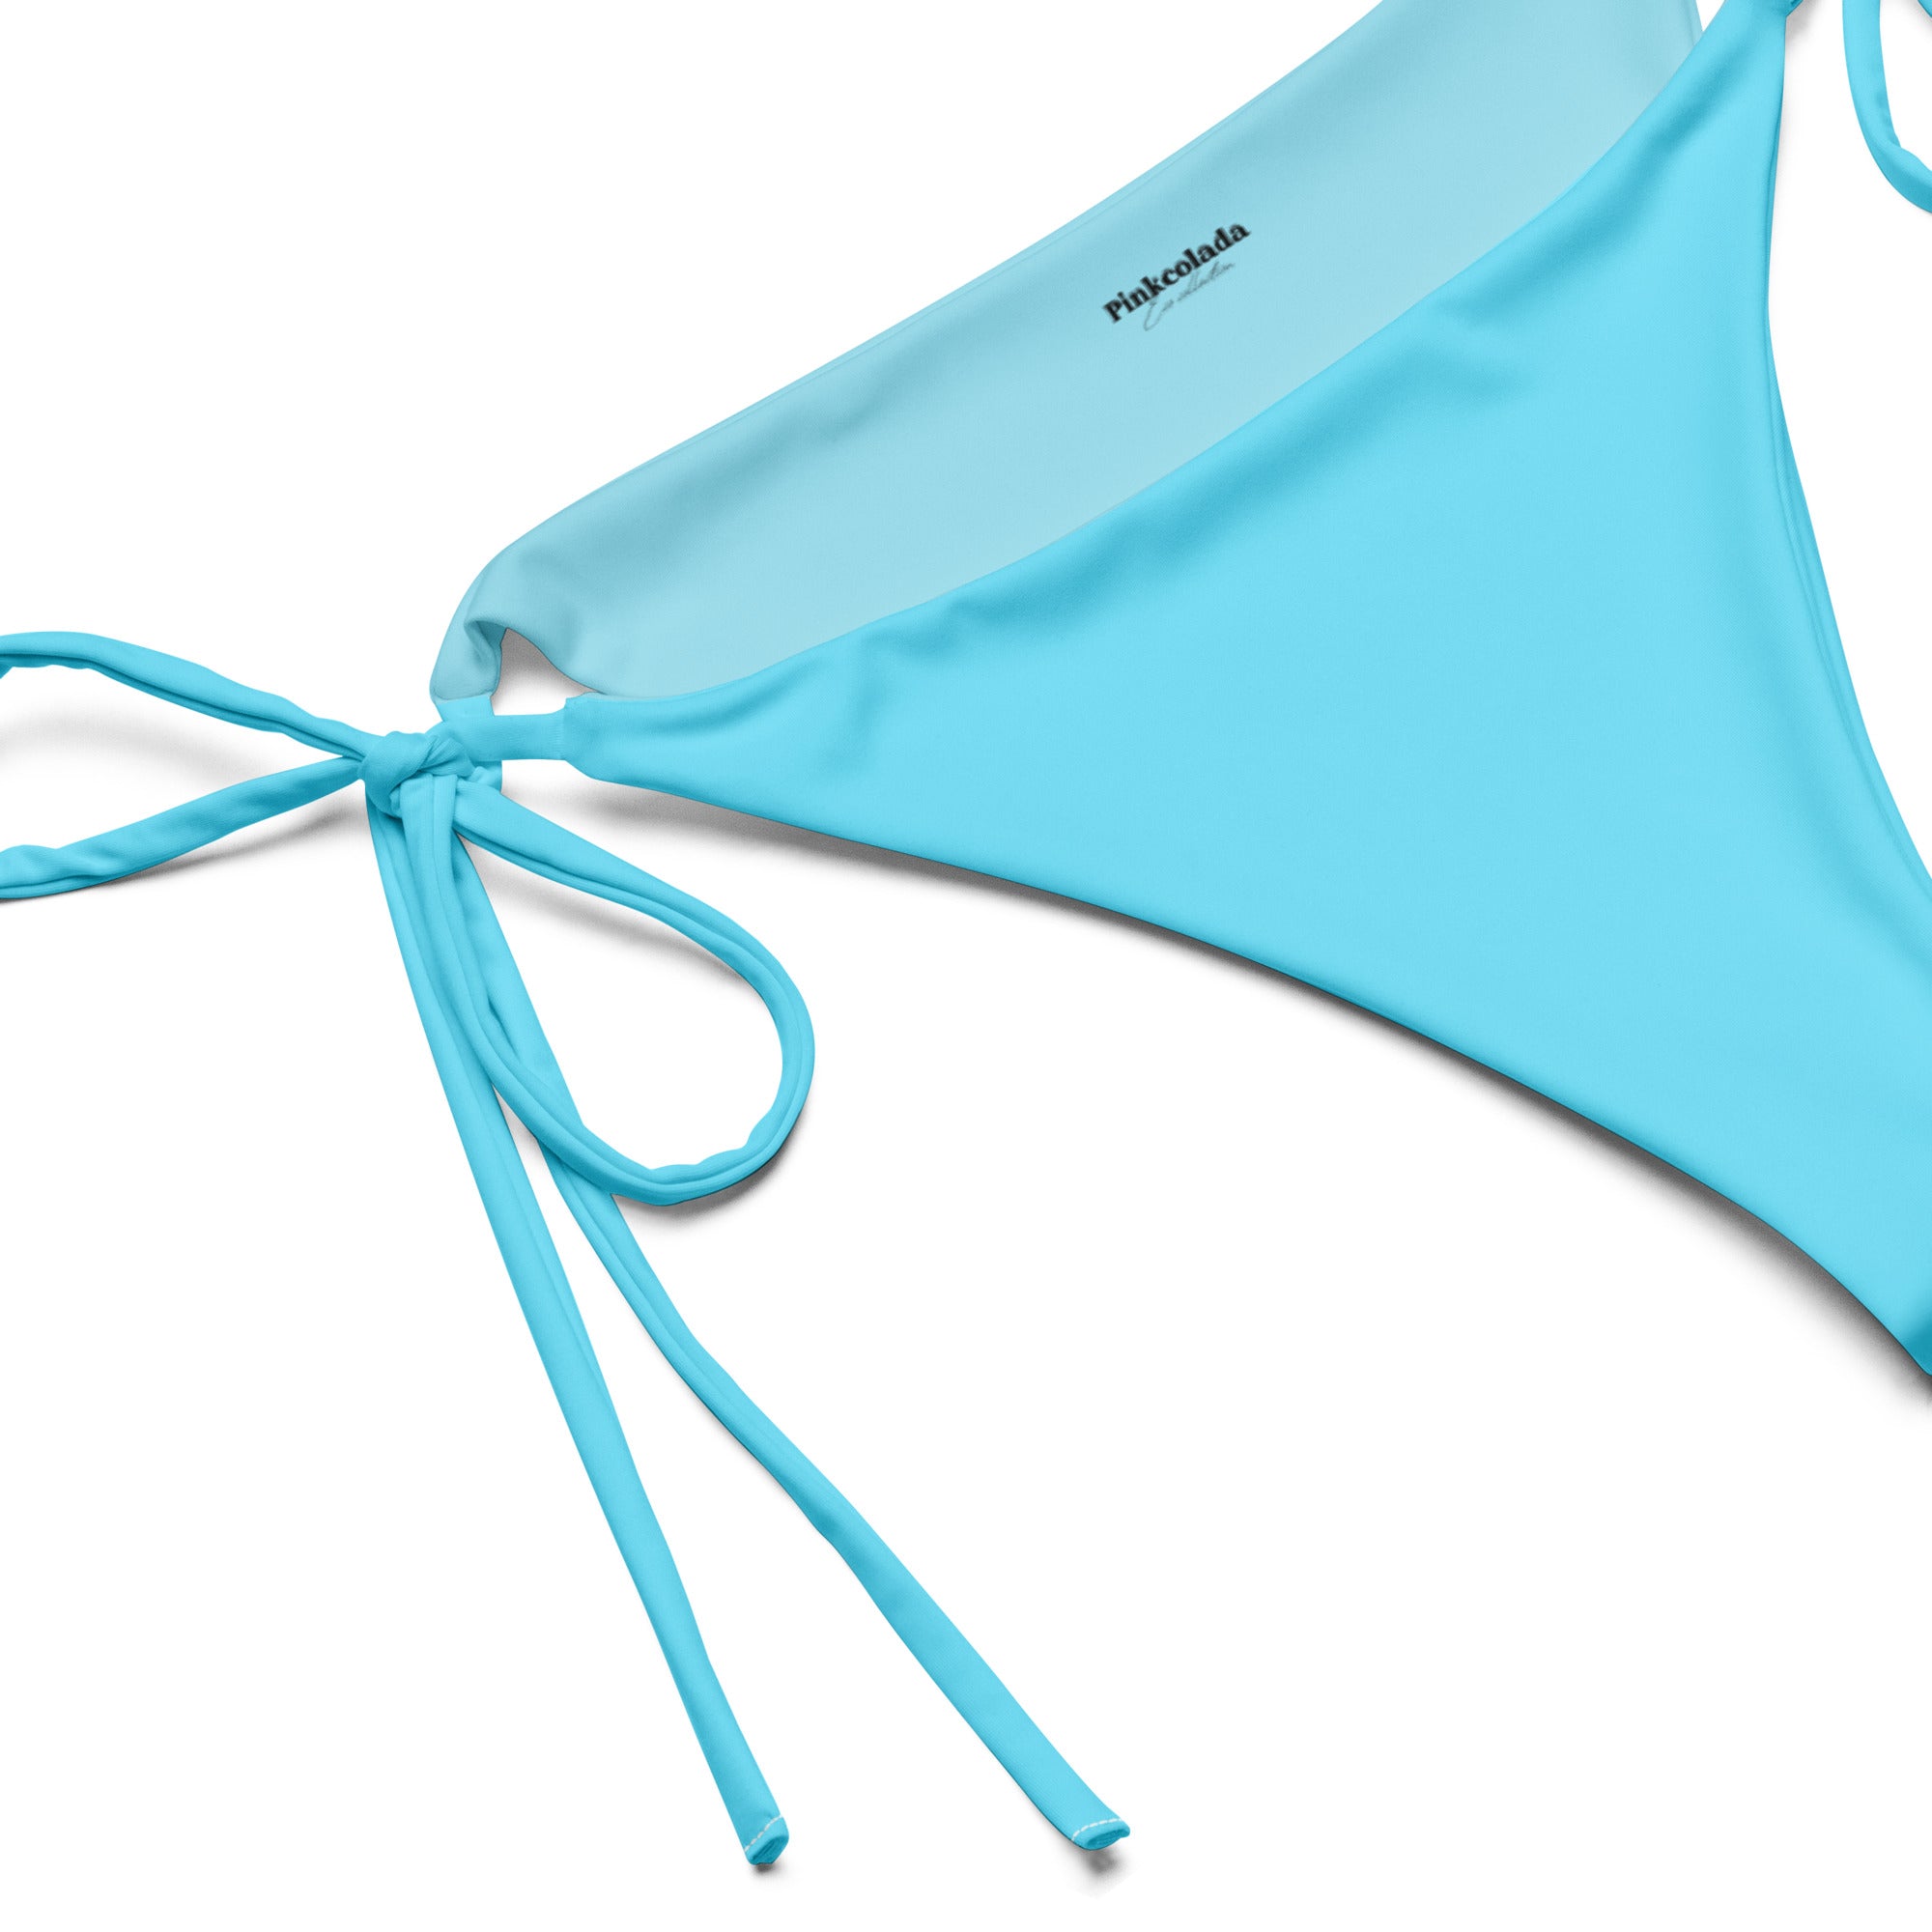 Marina bikini bottom underwear -Floral blue